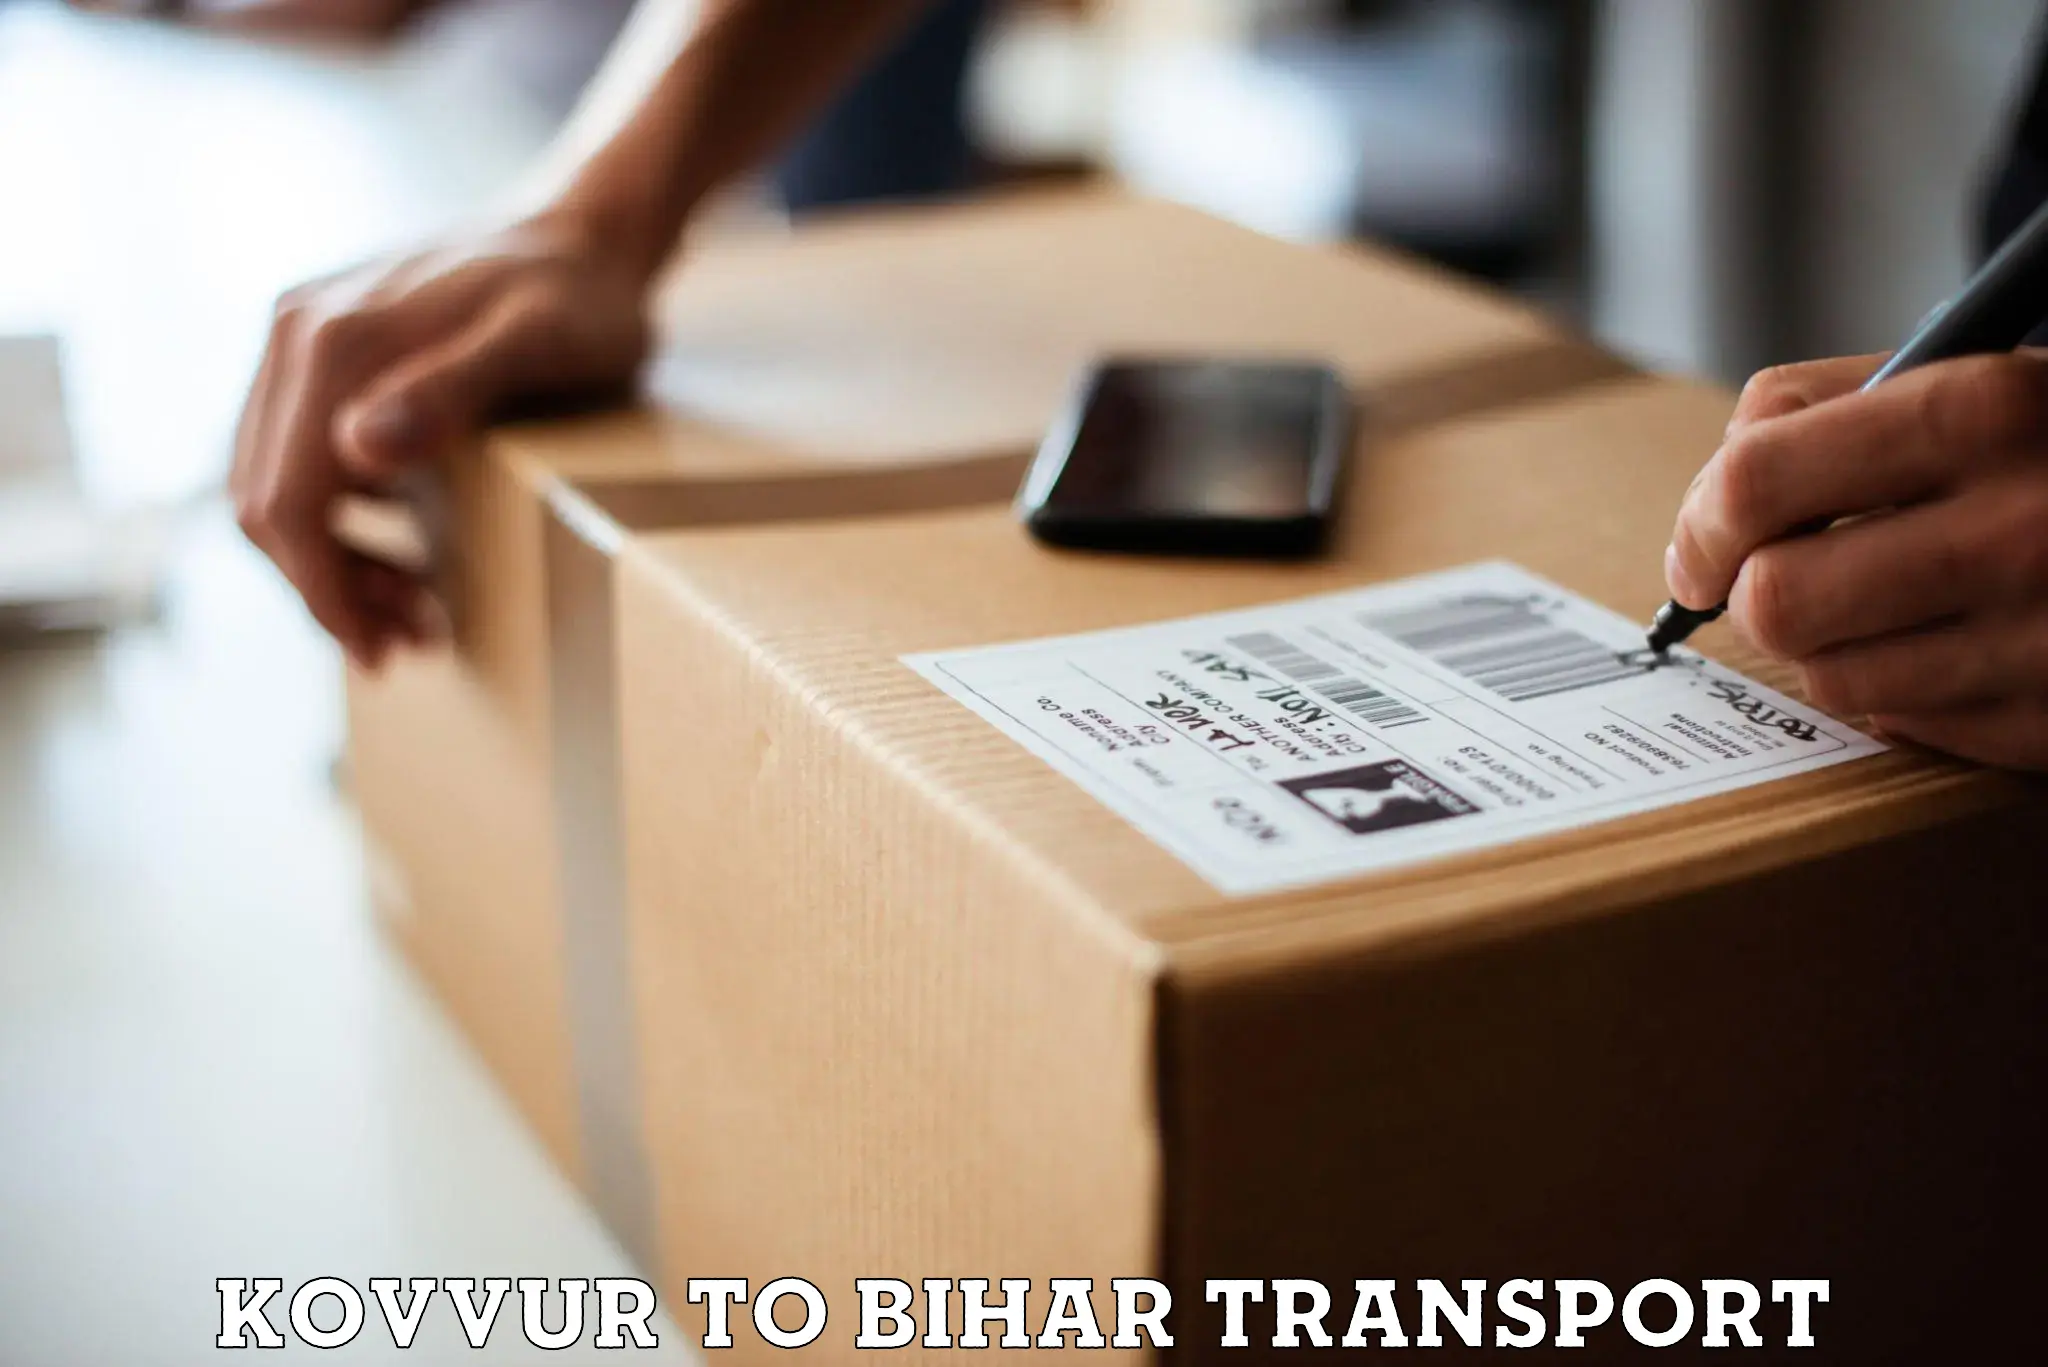 Road transport online services Kovvur to Tekari